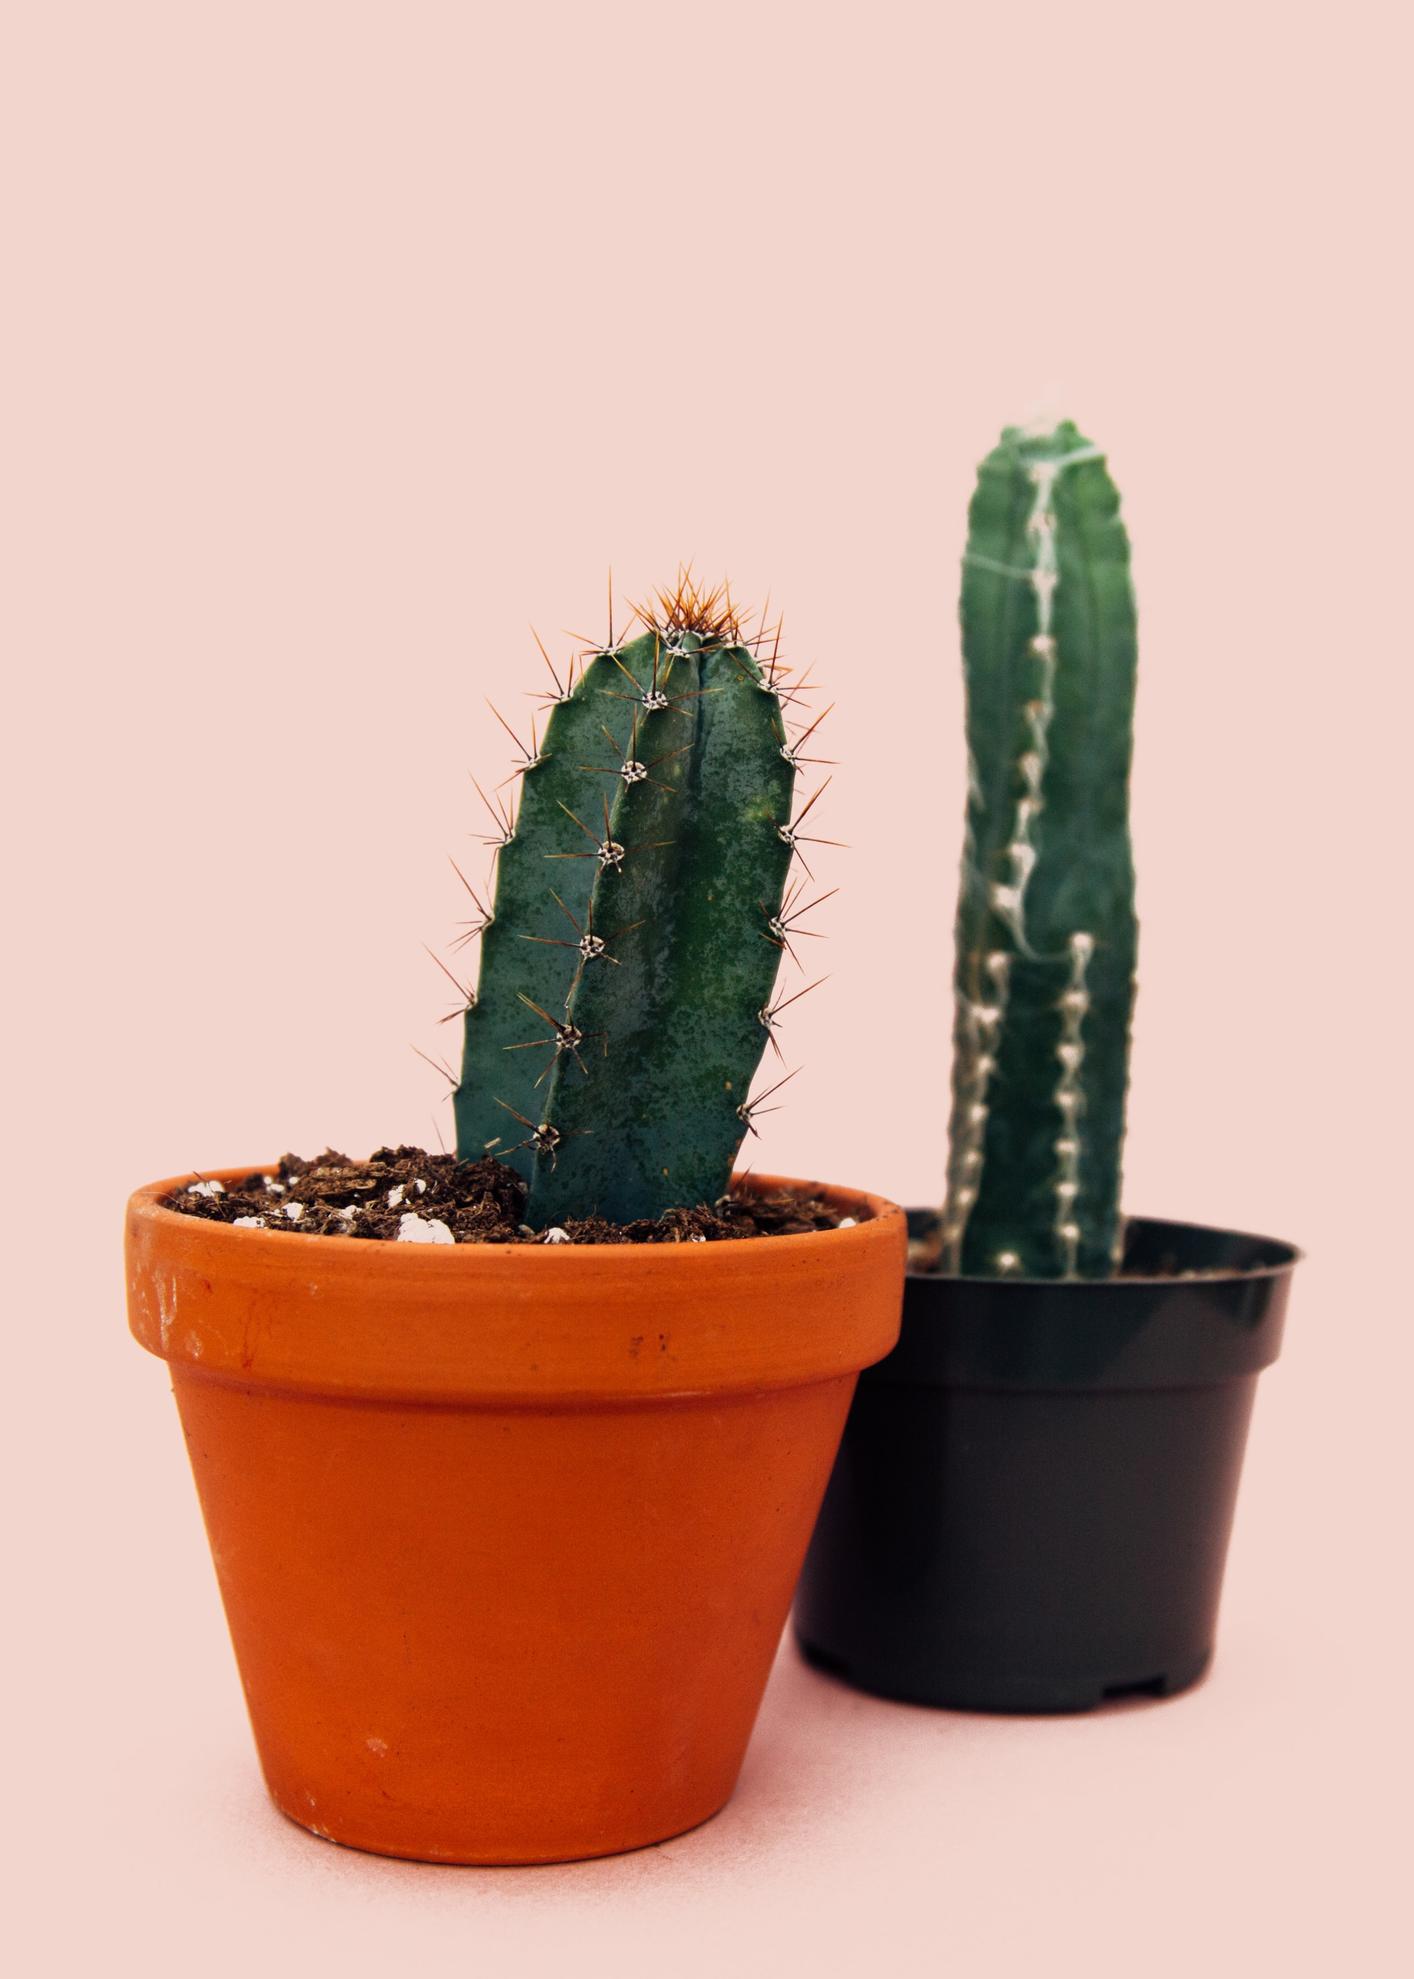 differences - cactus